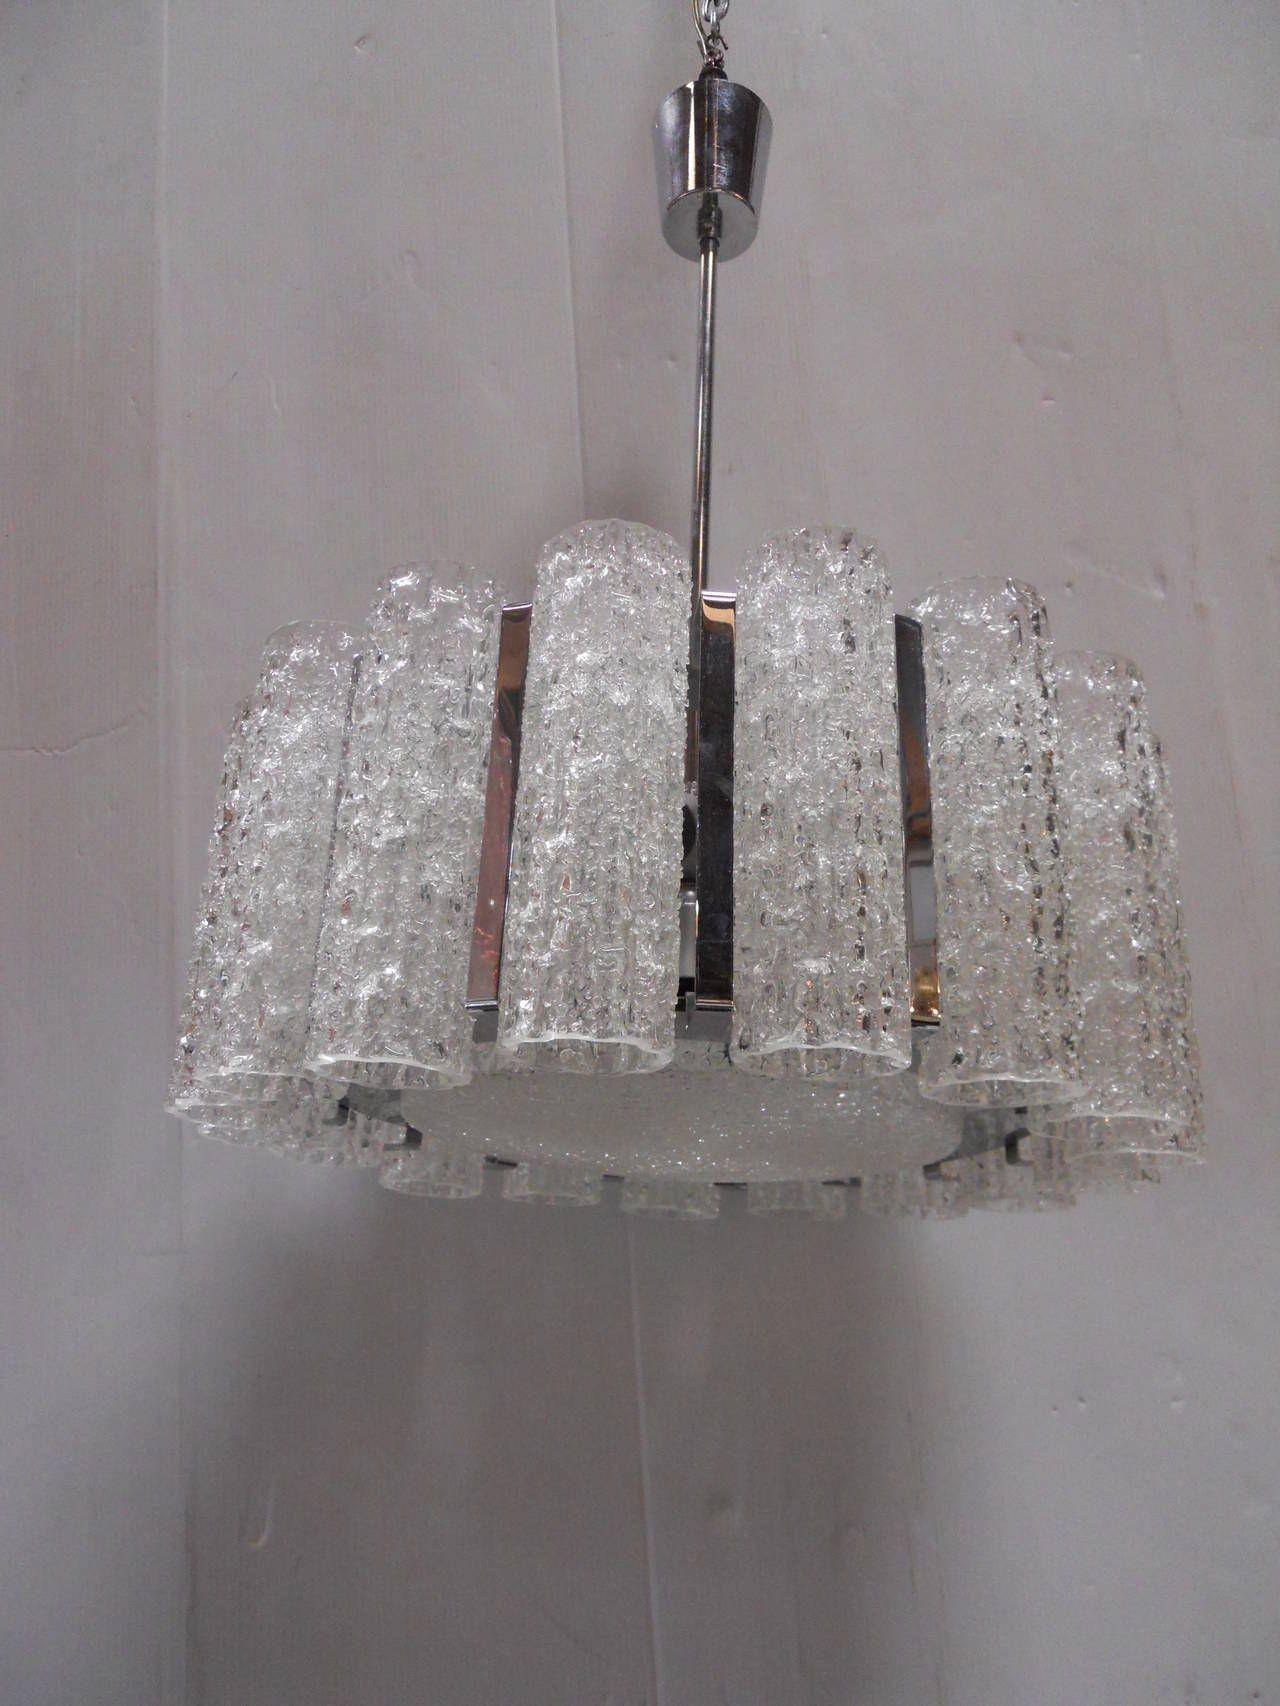 Marvelous Doria glass tubes and chrome chandelier, handblown in Murano, Italy.

Diameter: 21